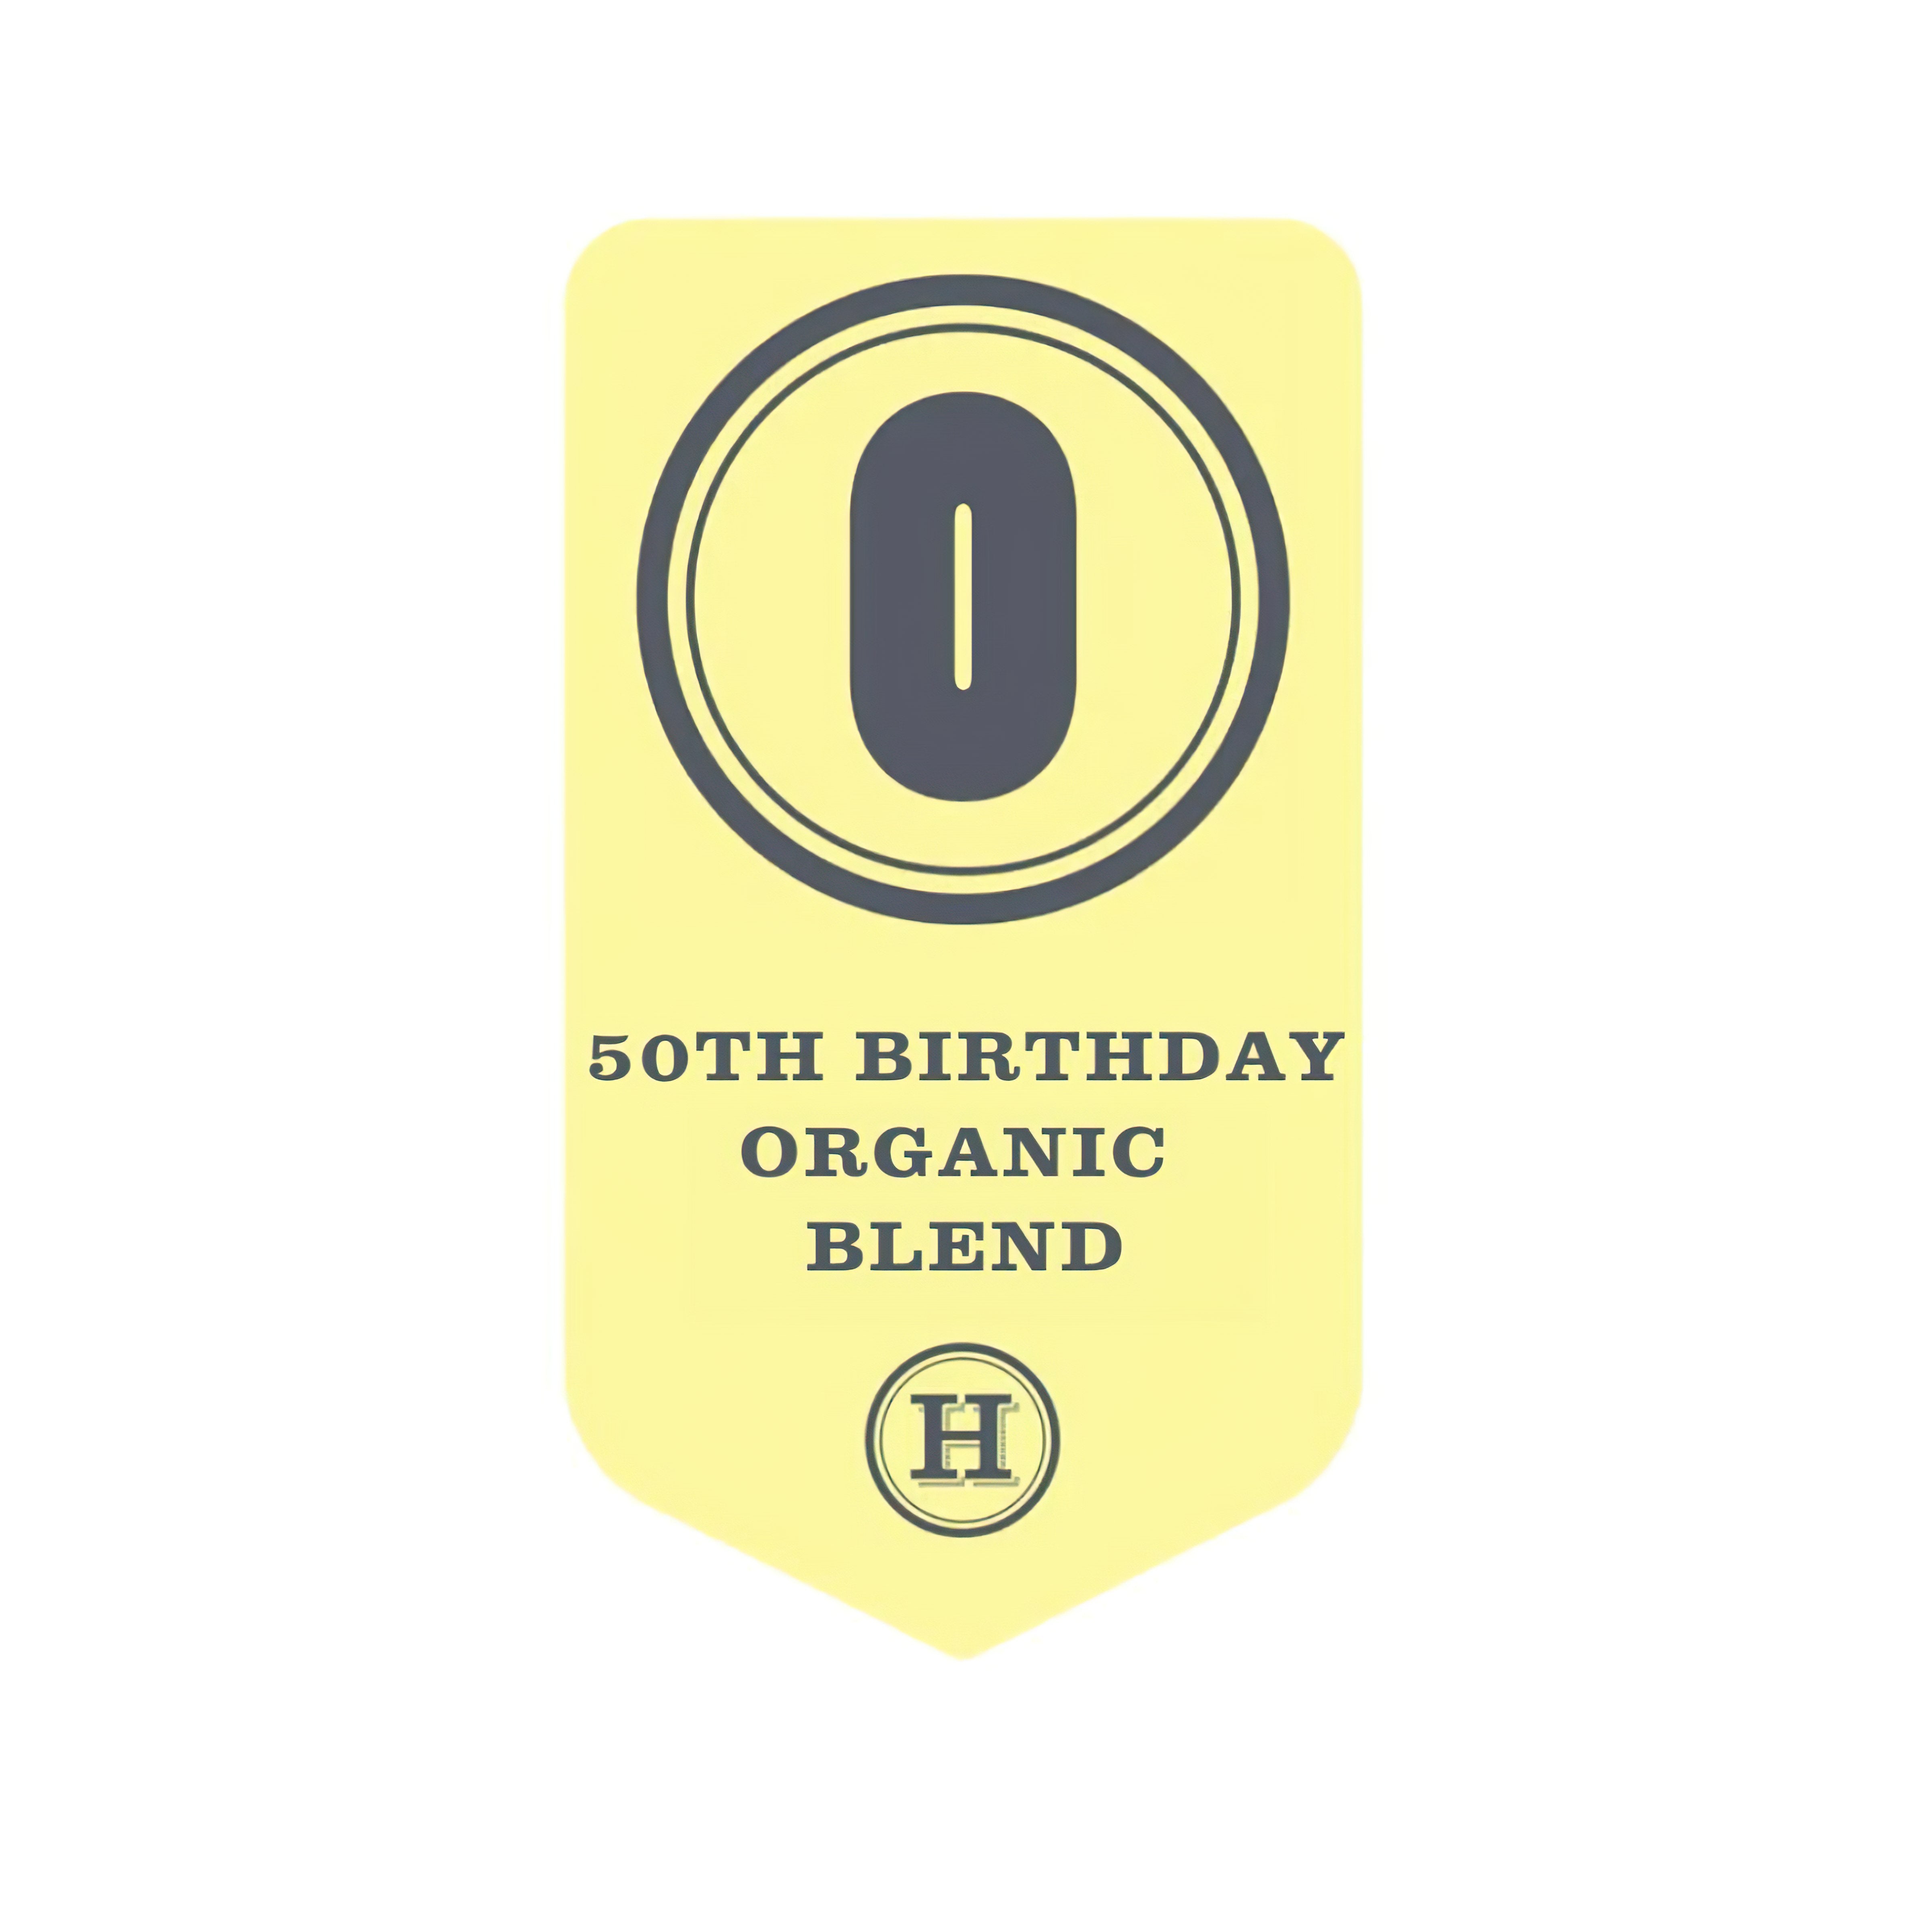 50th Birthday Organic Blend